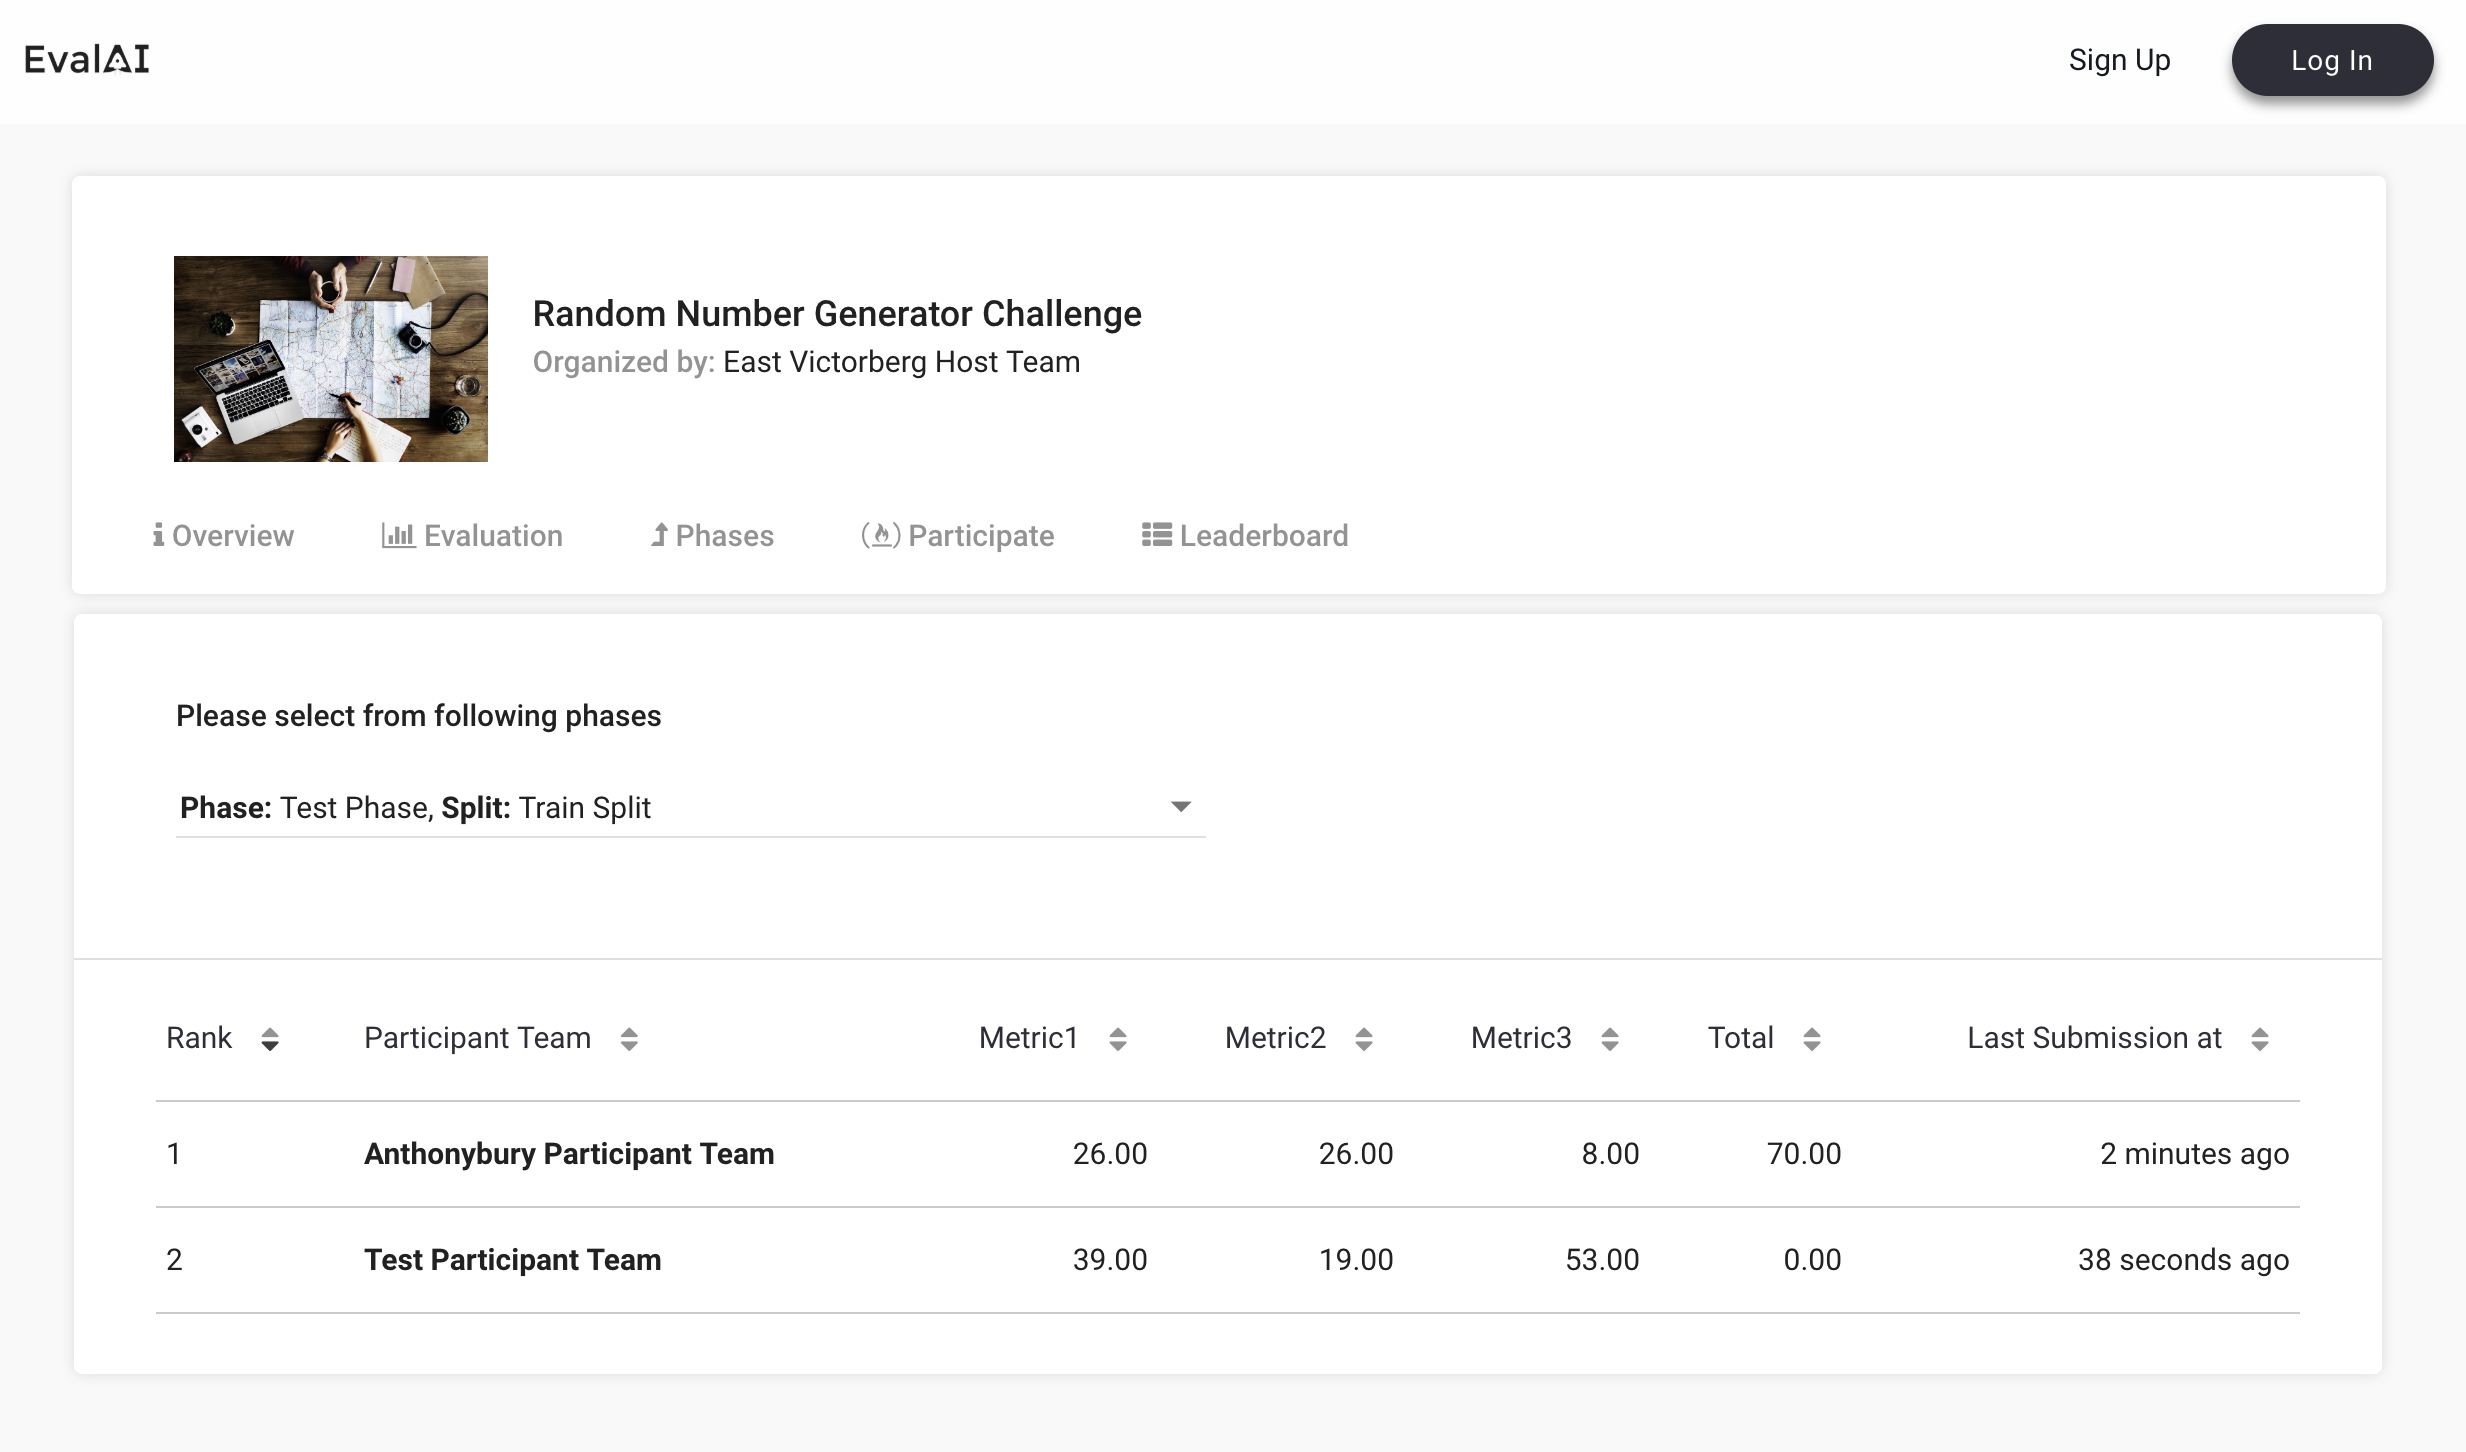 Random Number Generator Challenge - Leaderboard